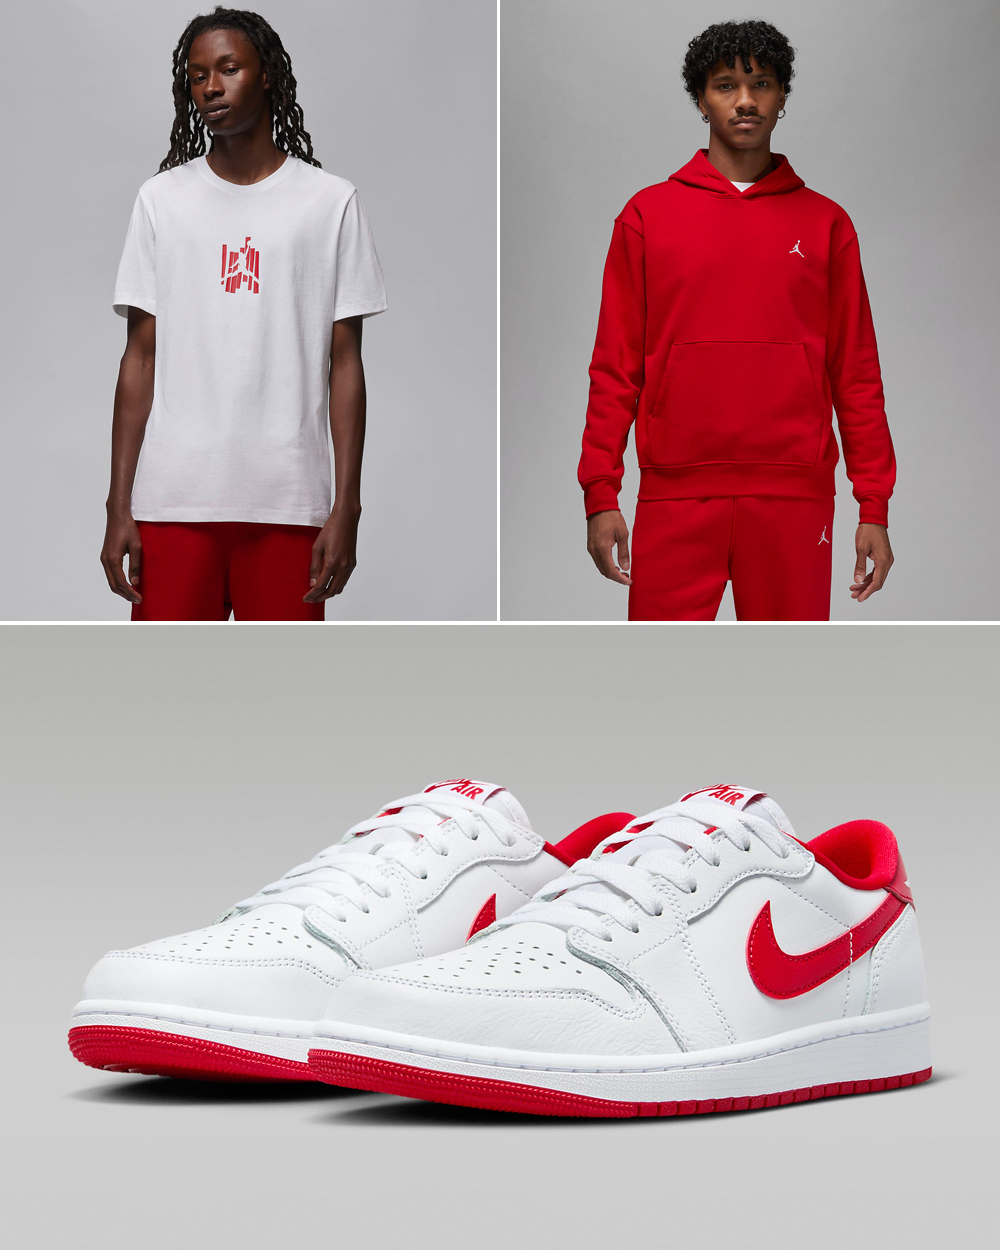 Air-Jordan-1-Low-OG-White-University-Red-Outfits